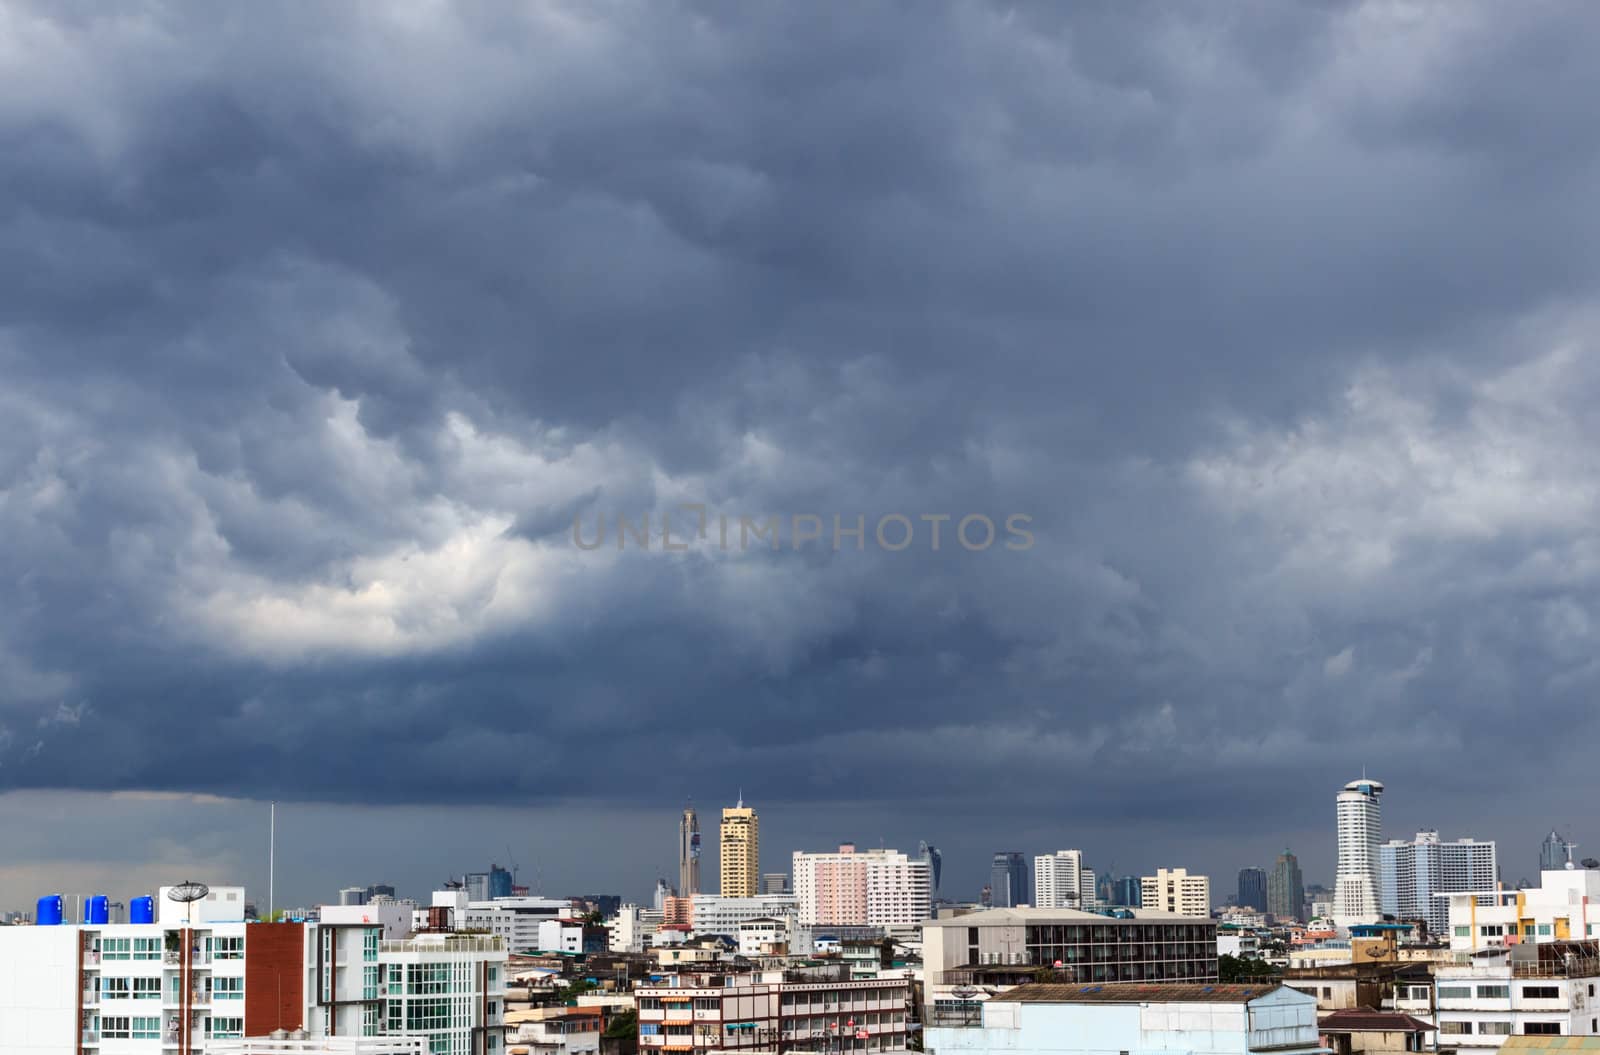 Bangkok horizontal in rainy season with raining in the distance